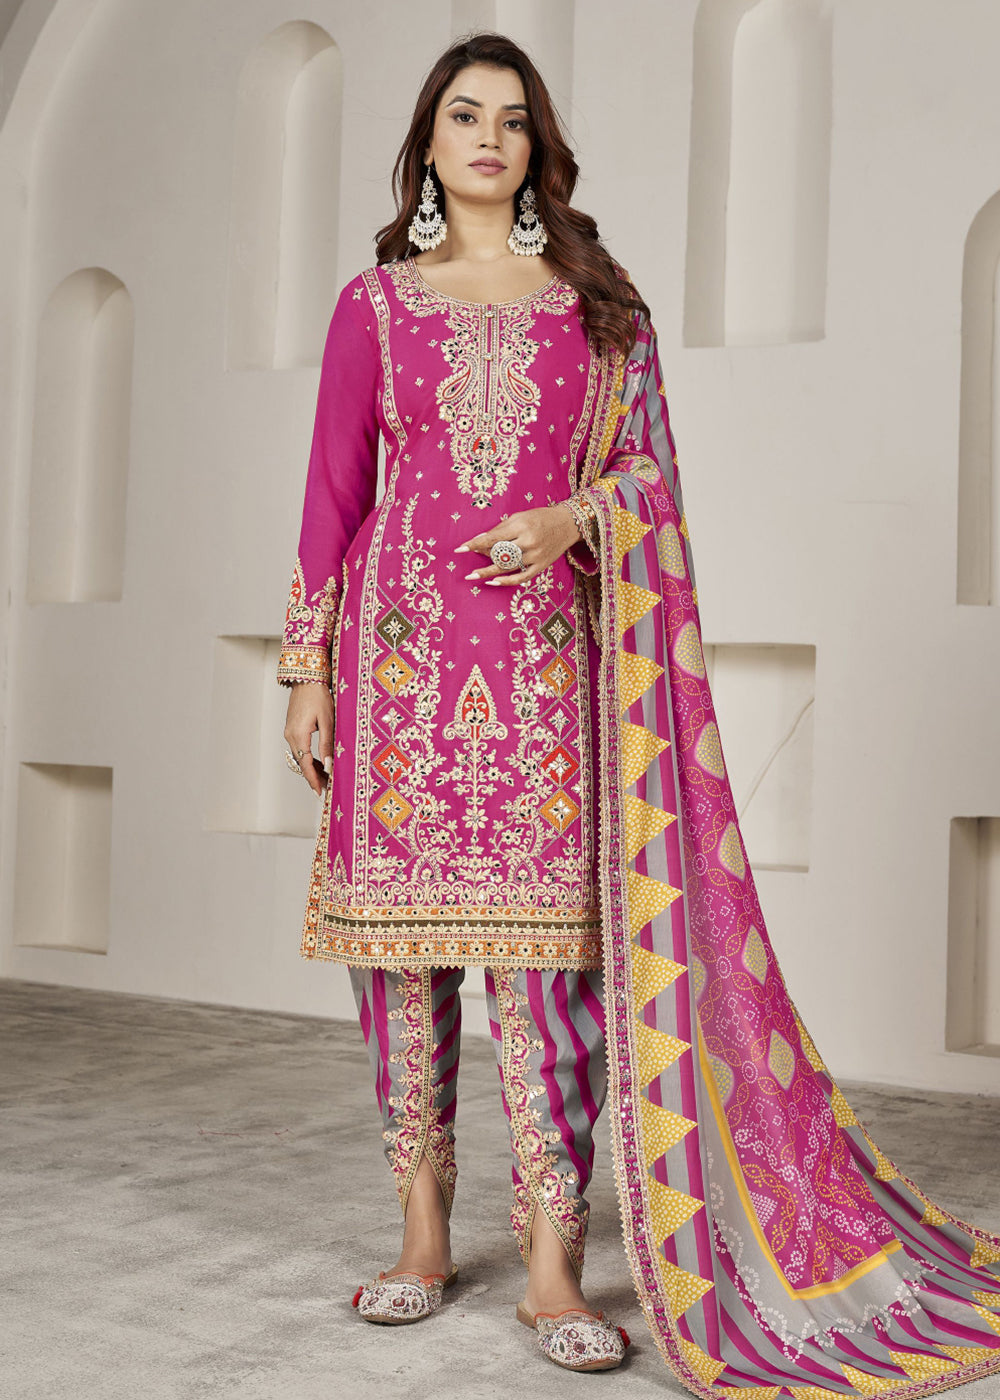 Buy Now Designer Rani Pink Punjabi Style Dhoti Style Salwar Suit Online in USA, UK, Canada, Germany, Australia & Worldwide at Empress Clothing.